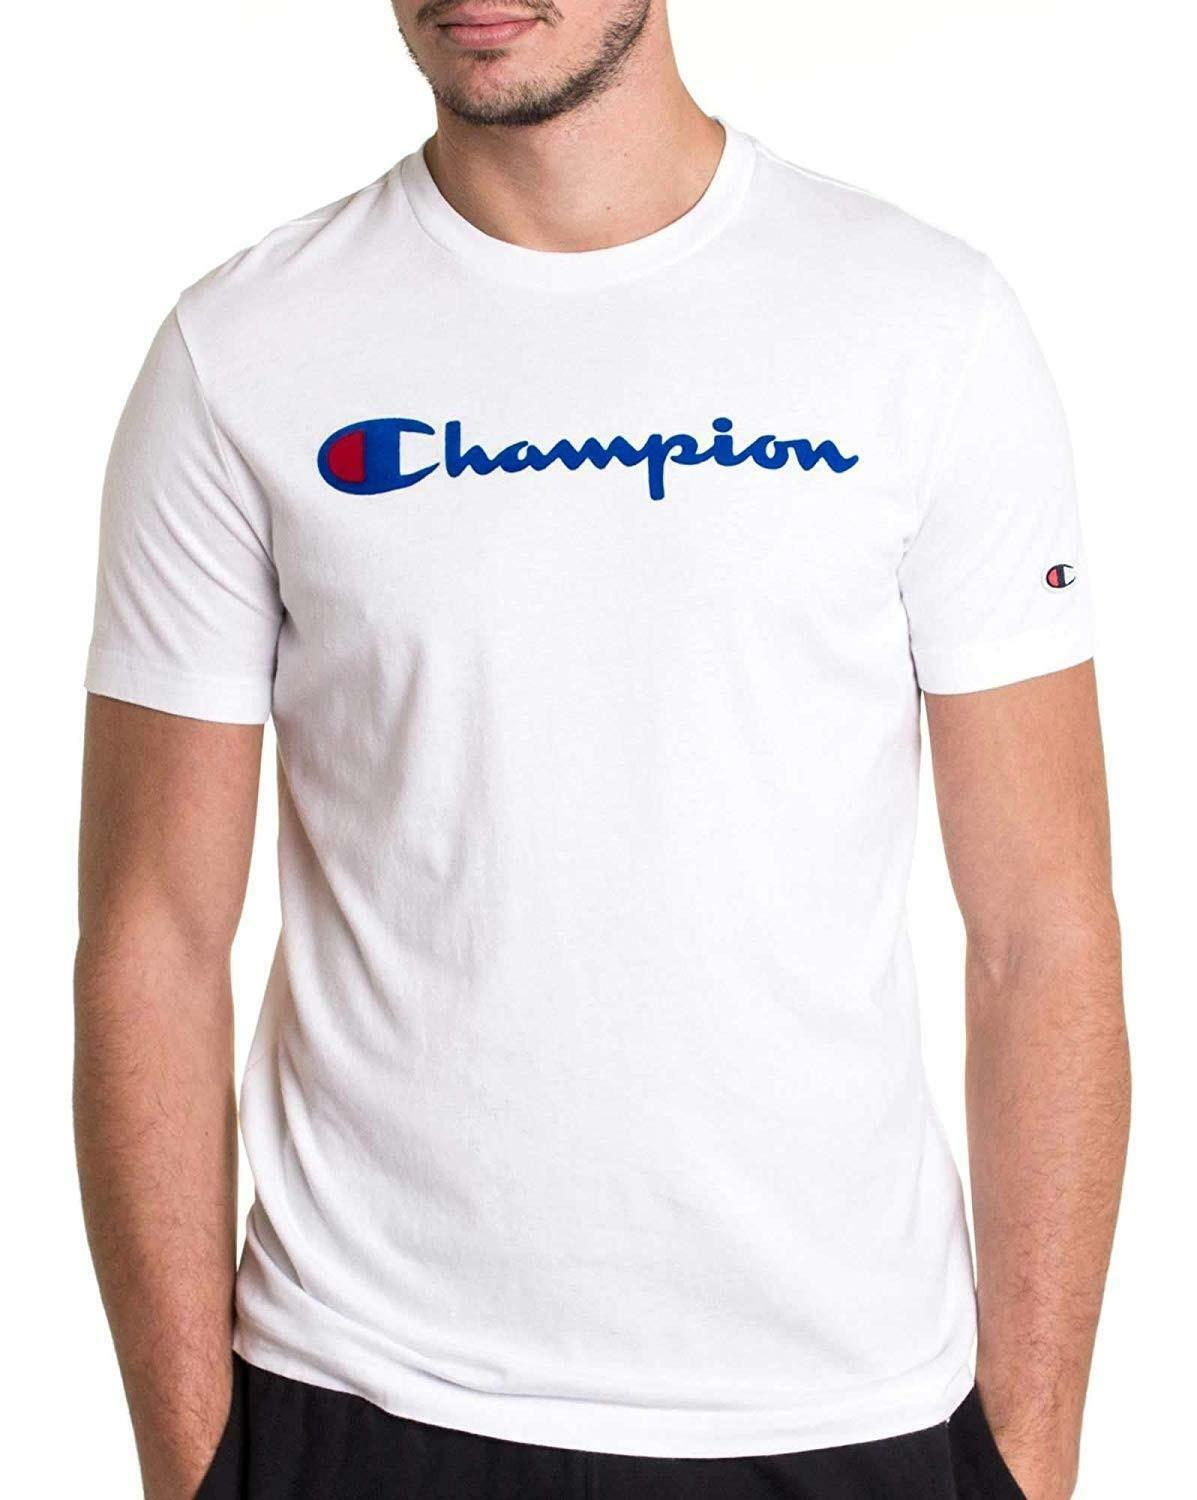 champion champion t-shirt uomo bianca 212264ww001